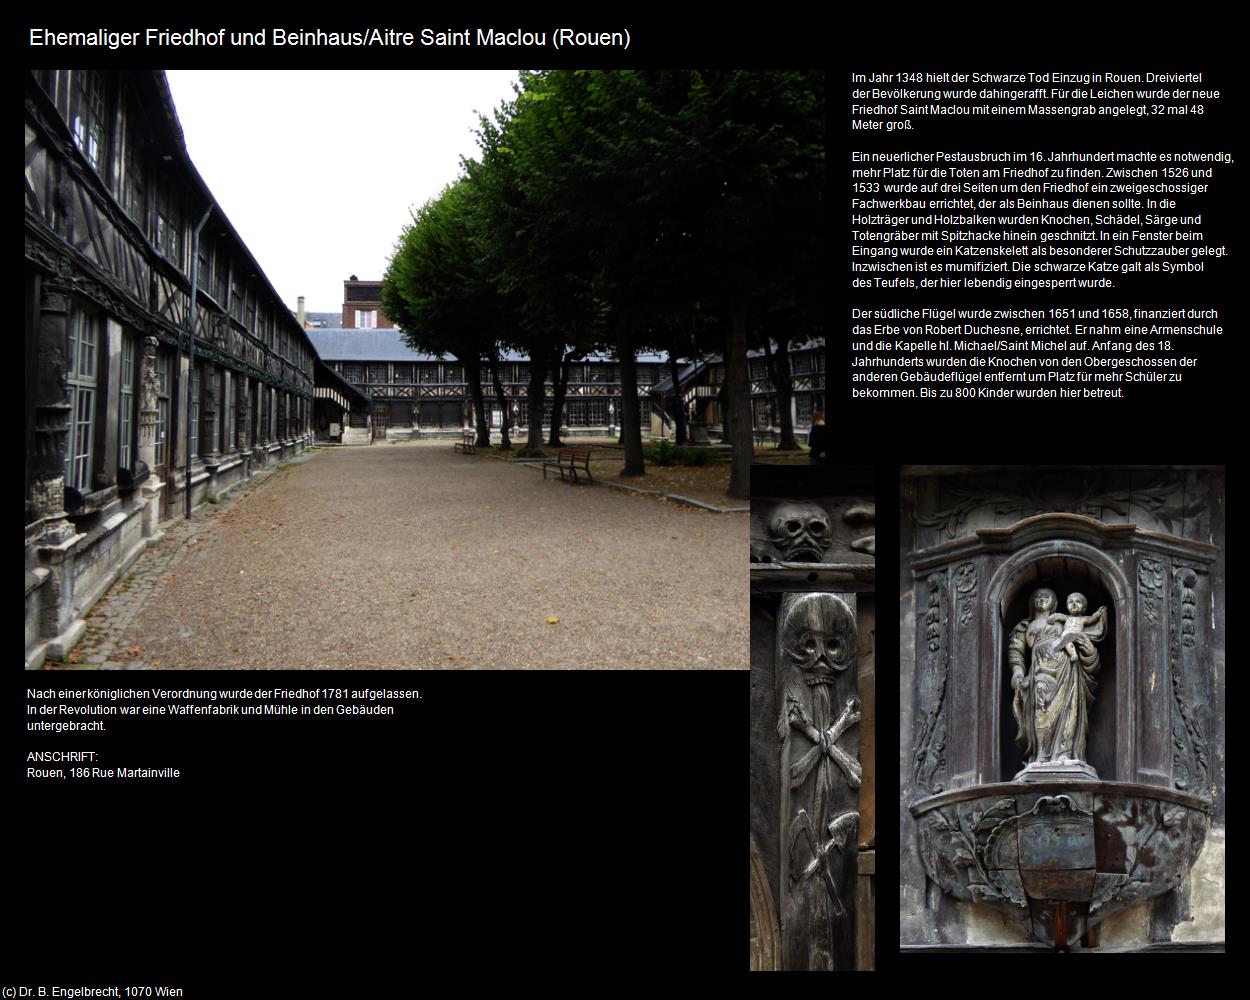 Ehem. Friedhof und Beinhaus/Aitre Saint Maclou  (Rouen (FR-NOR)) in Kulturatlas-FRANKREICH